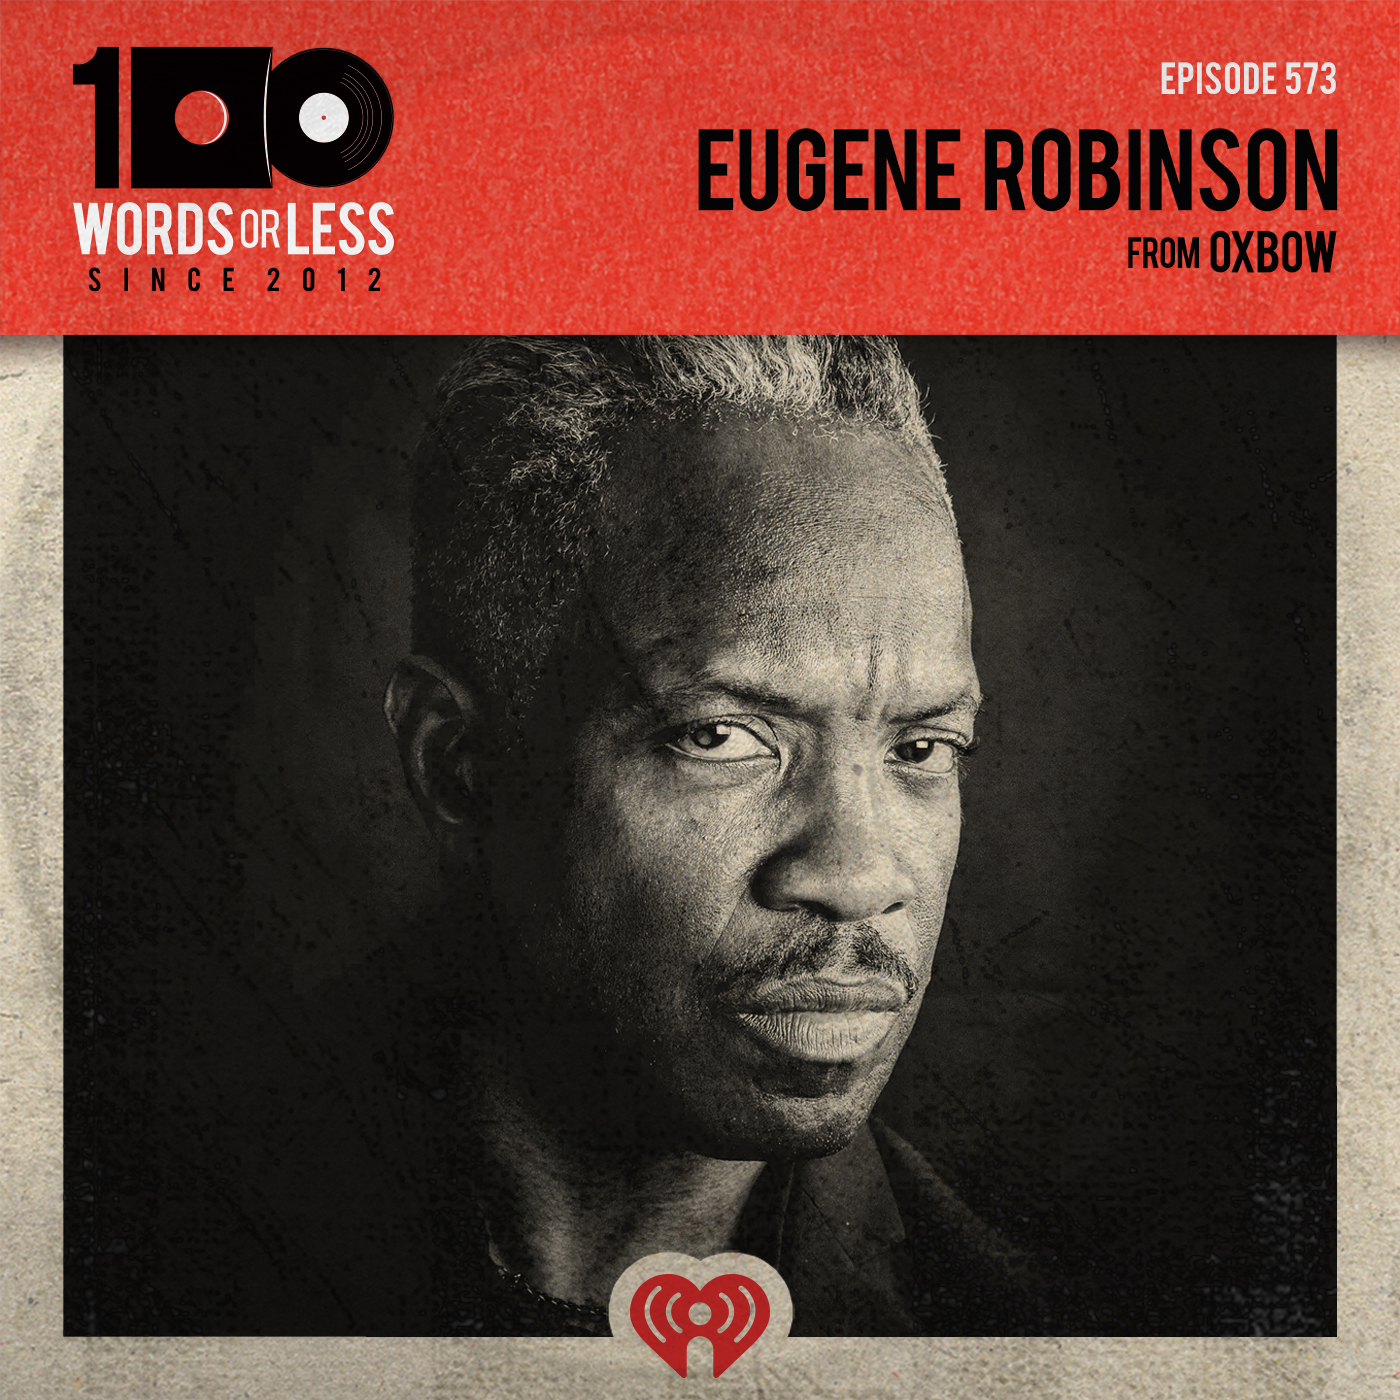 Eugene Robinson from Oxbow & author